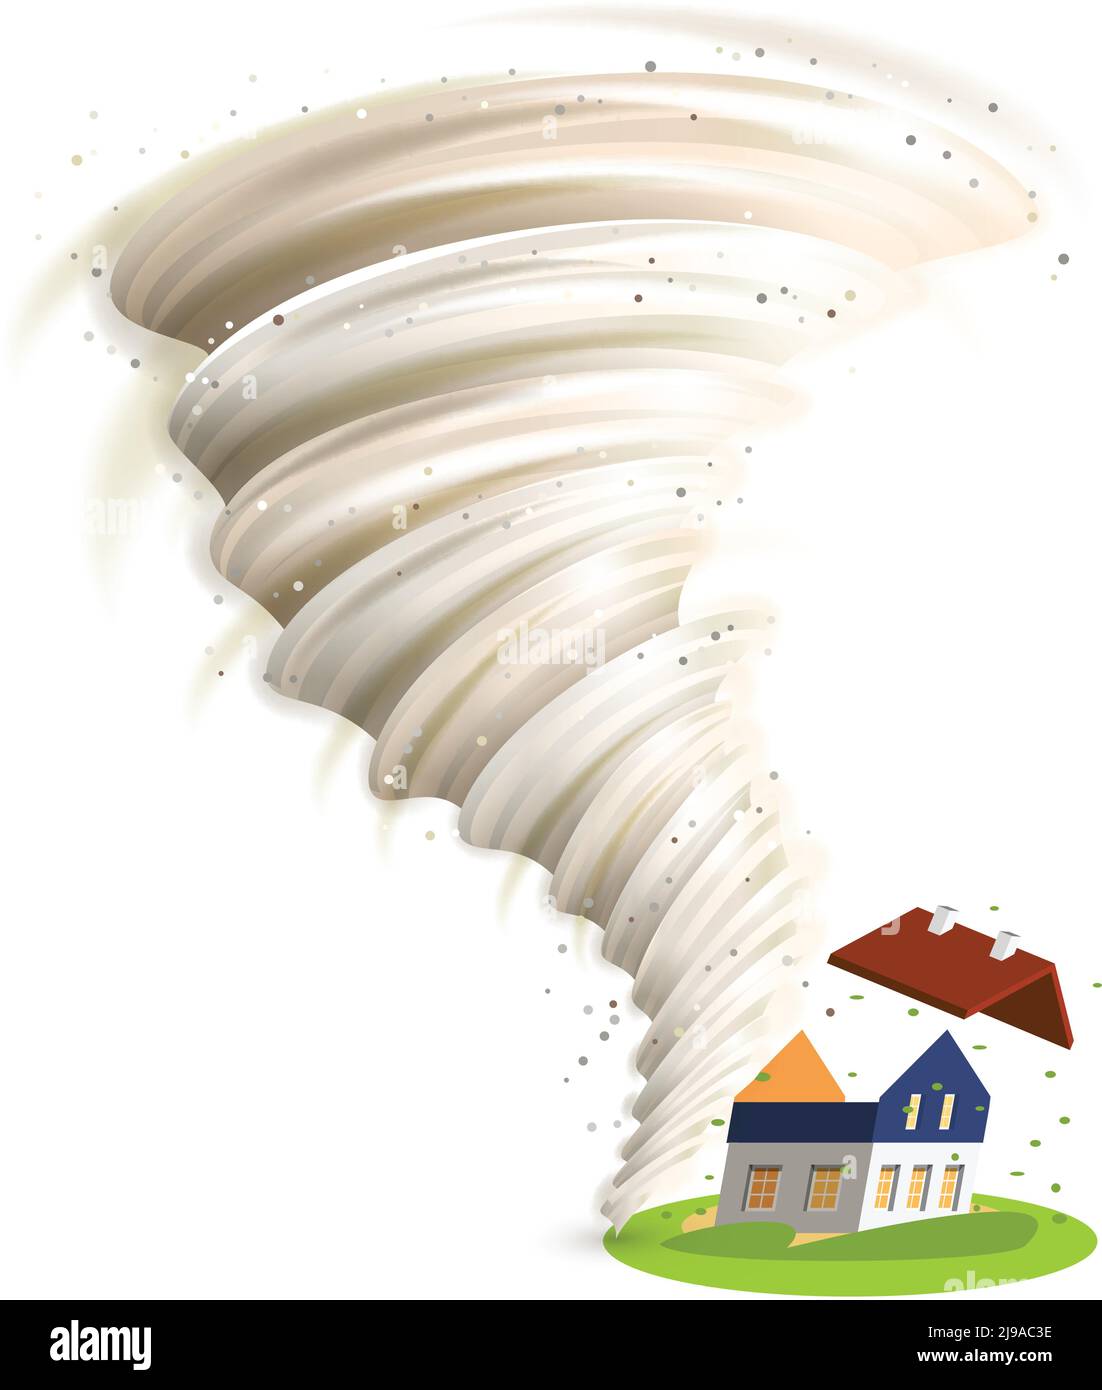 Tornado swirl damages village house roof vector illustration Stock Vector